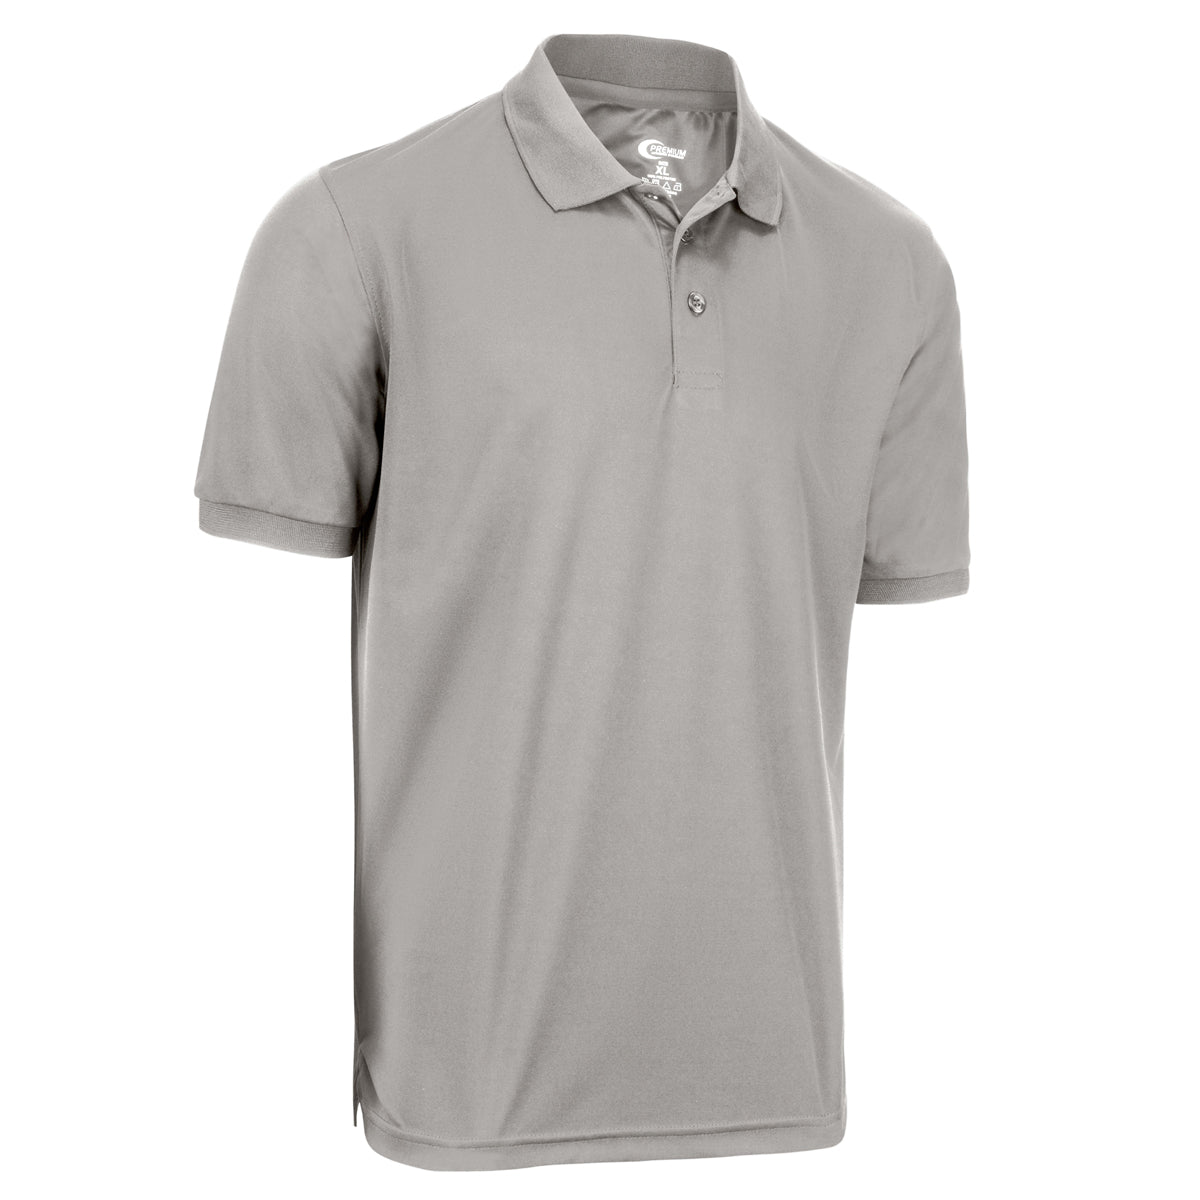 Men's Dri Fit Moisture Wicking Polo Shirt - Big